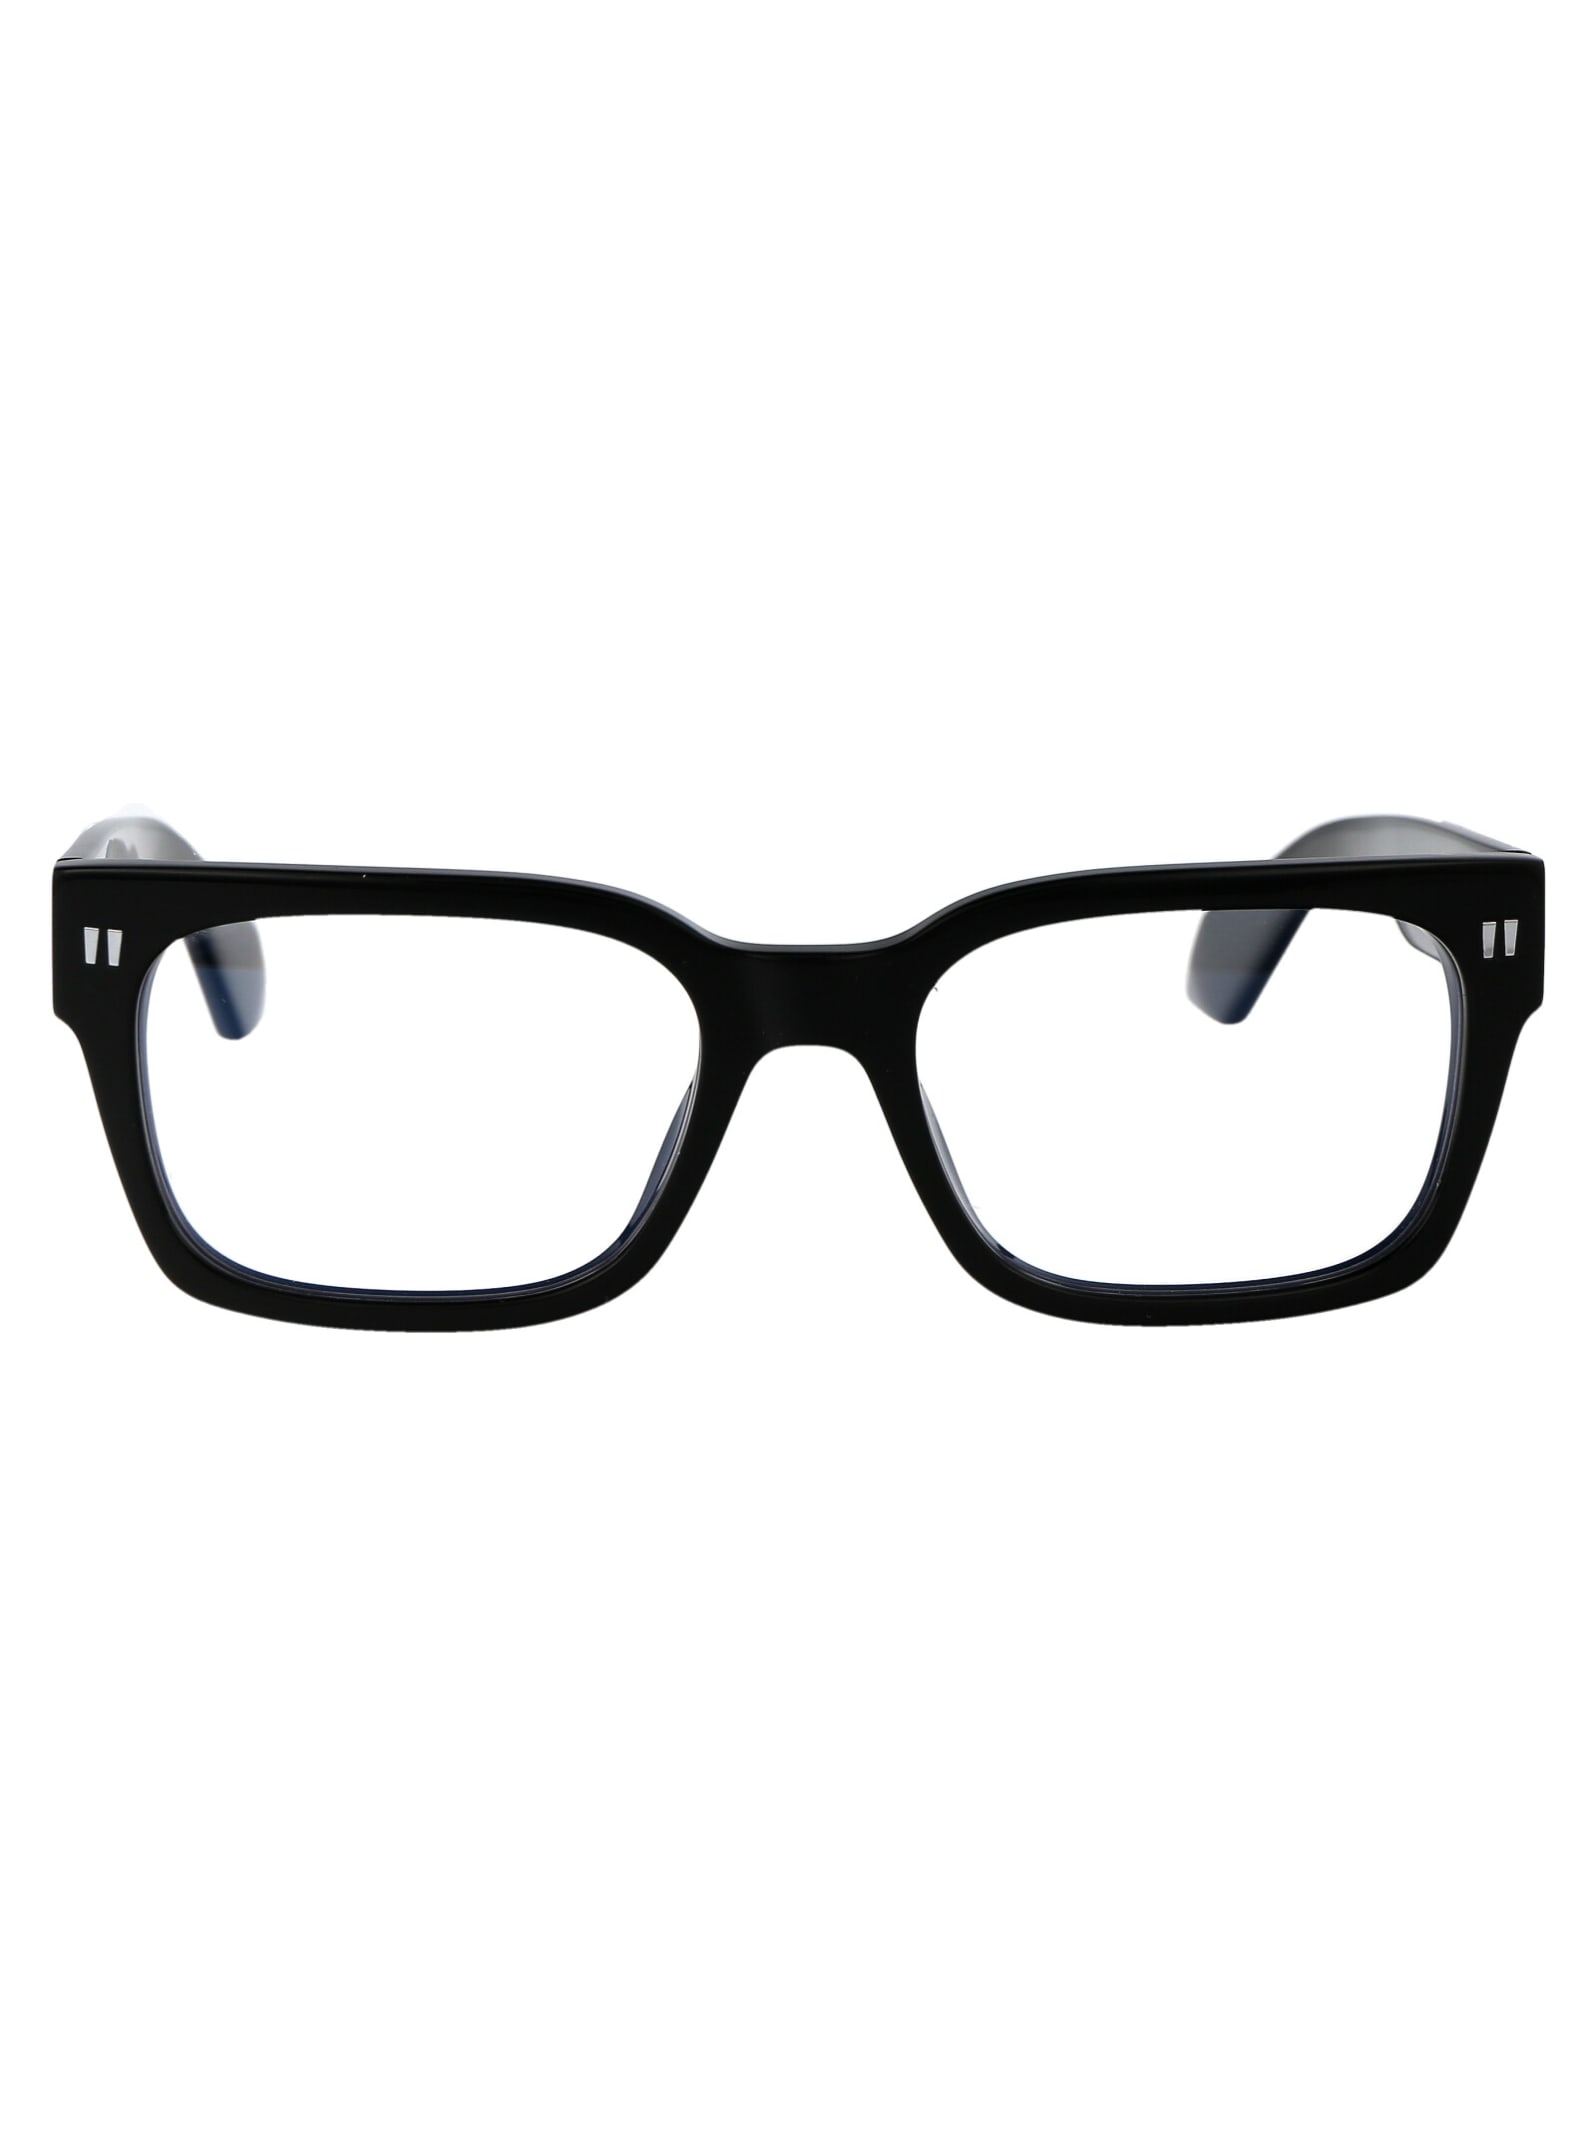 Optical Style 53 Glasses